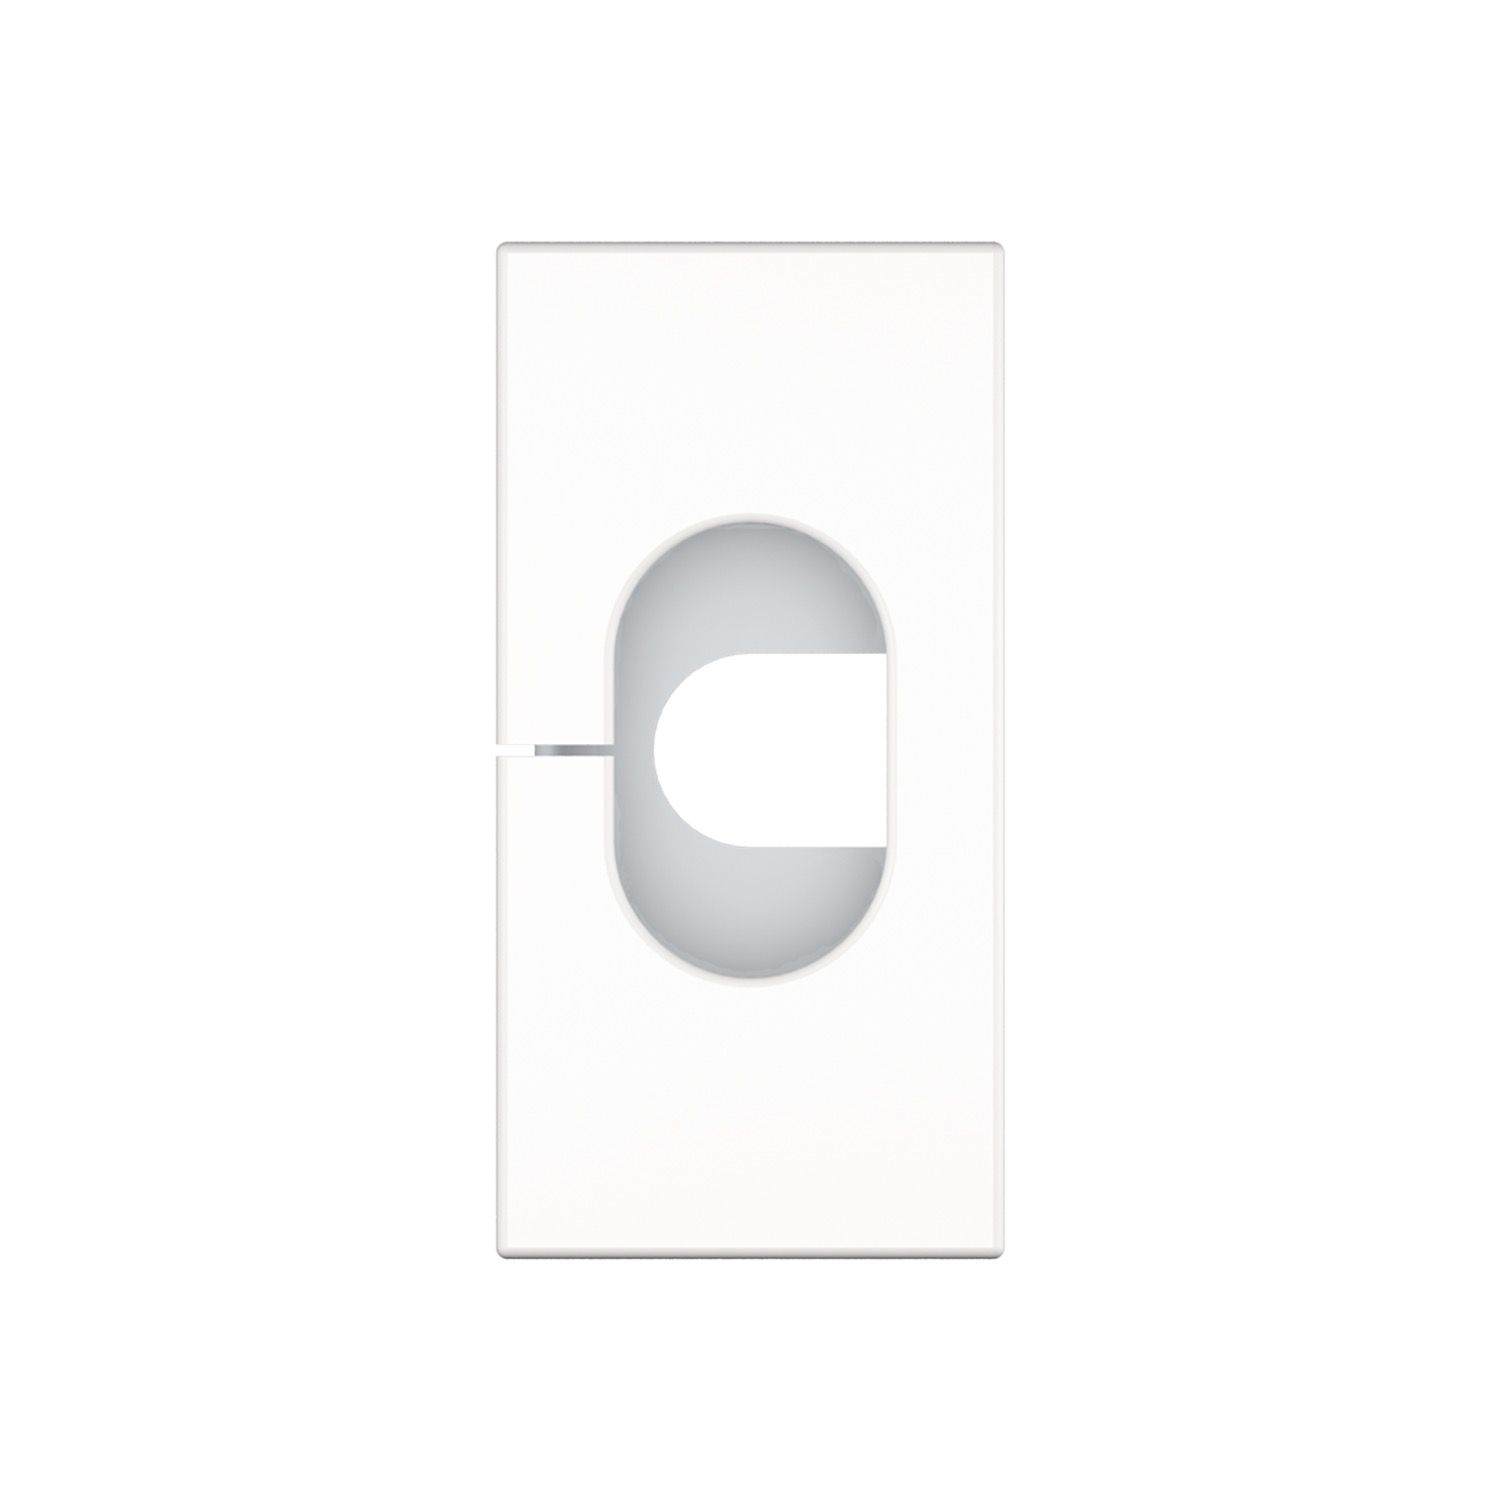 Kindermann Konnect flex 45 click Blindblende - Kabeldurchlass 8 mm - Halbblende - Weiß